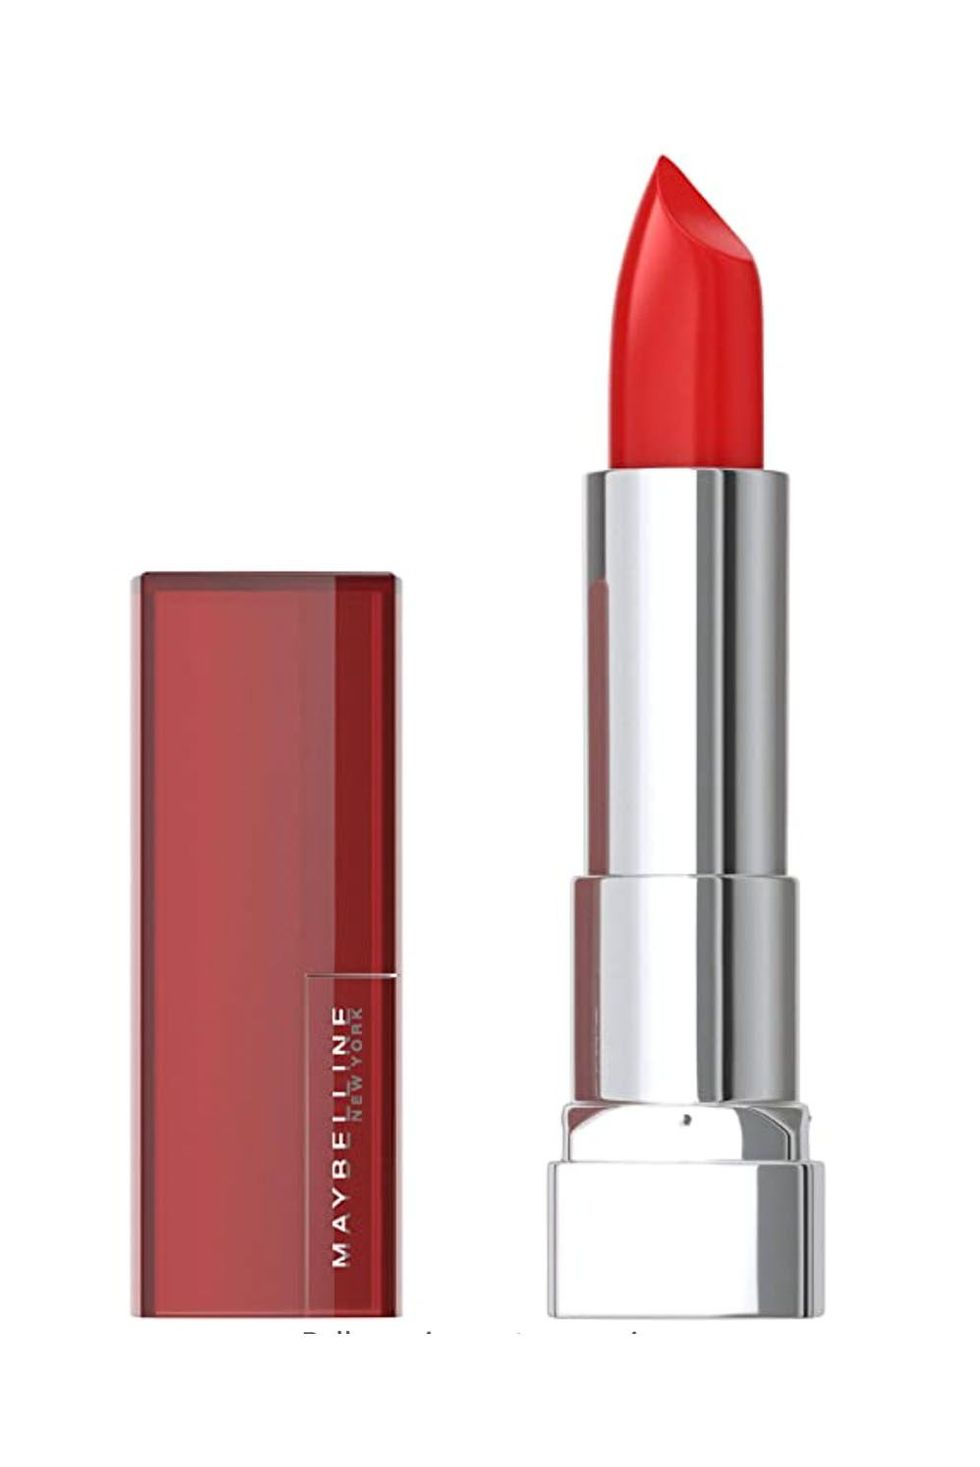 Maybelline Color Sensational Lipstick in Red Revival